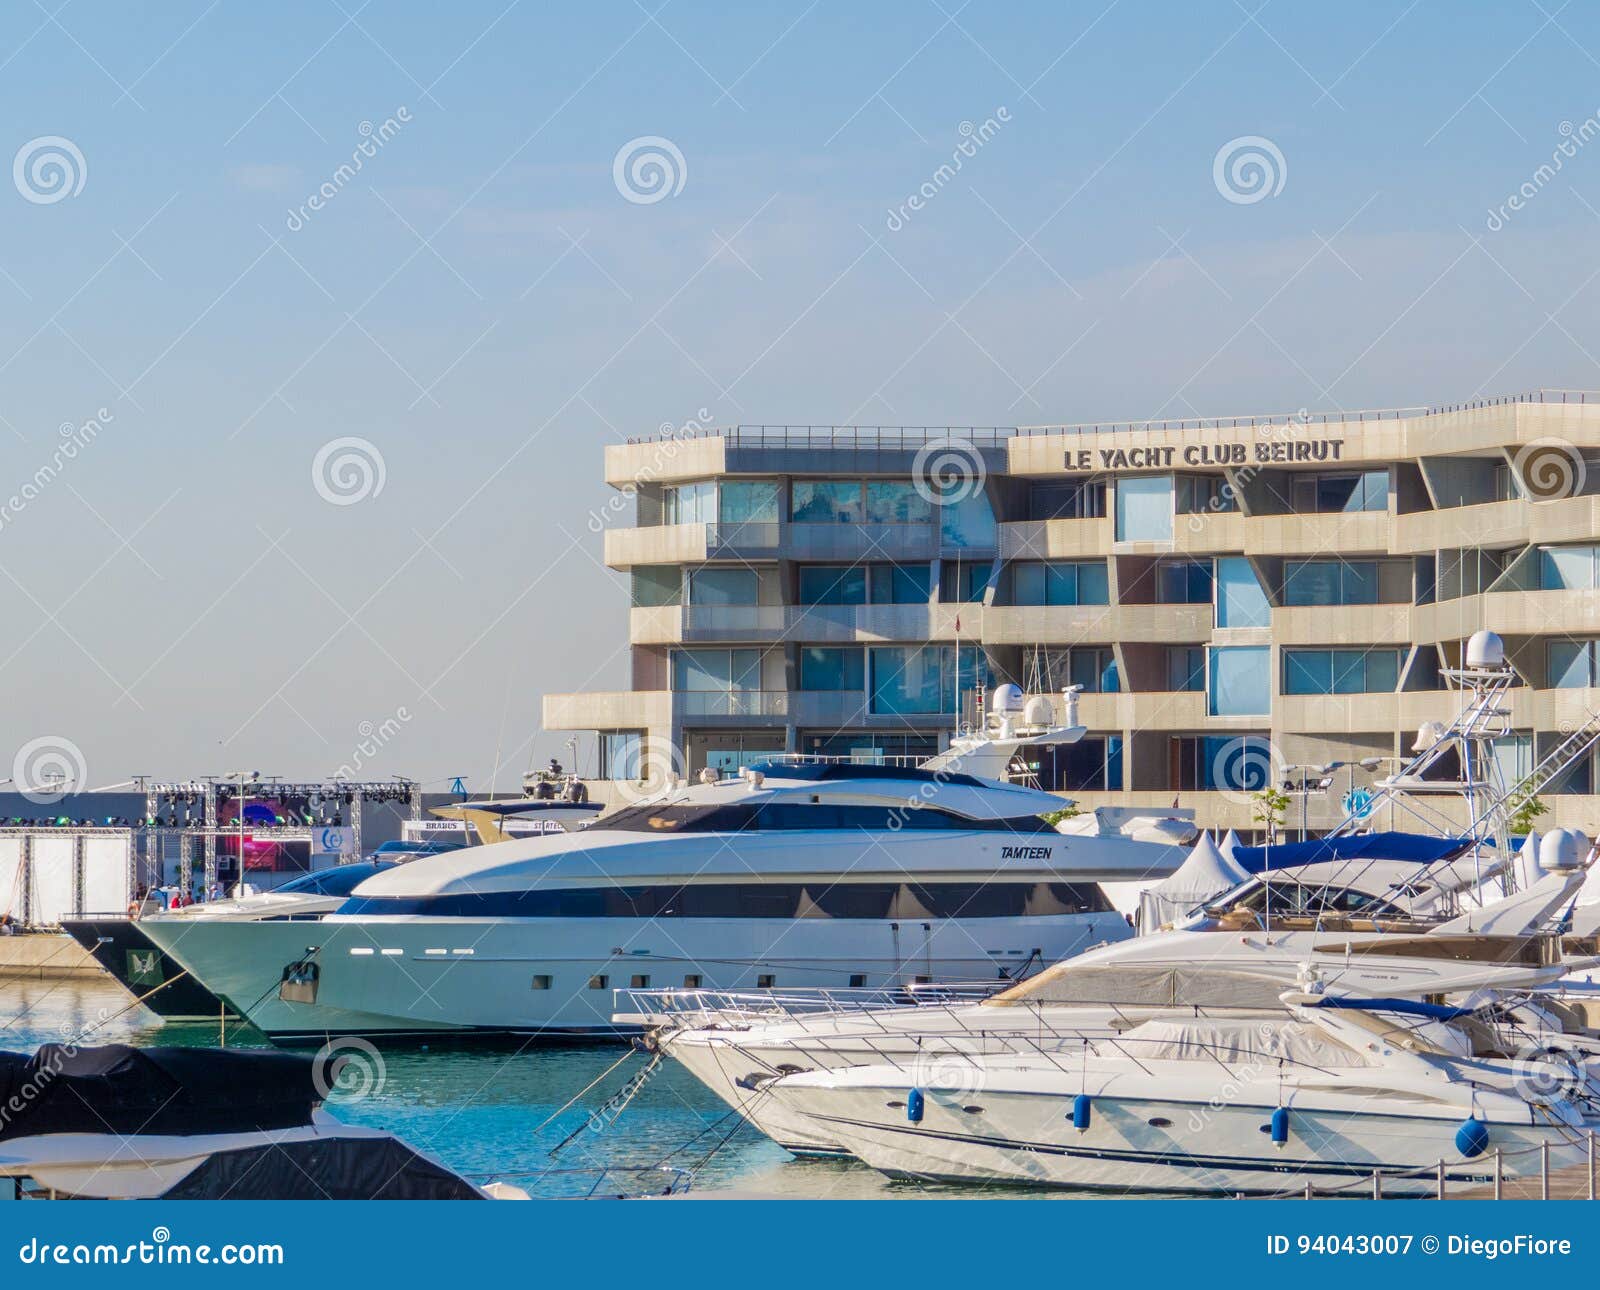 yacht rental lebanon beirut